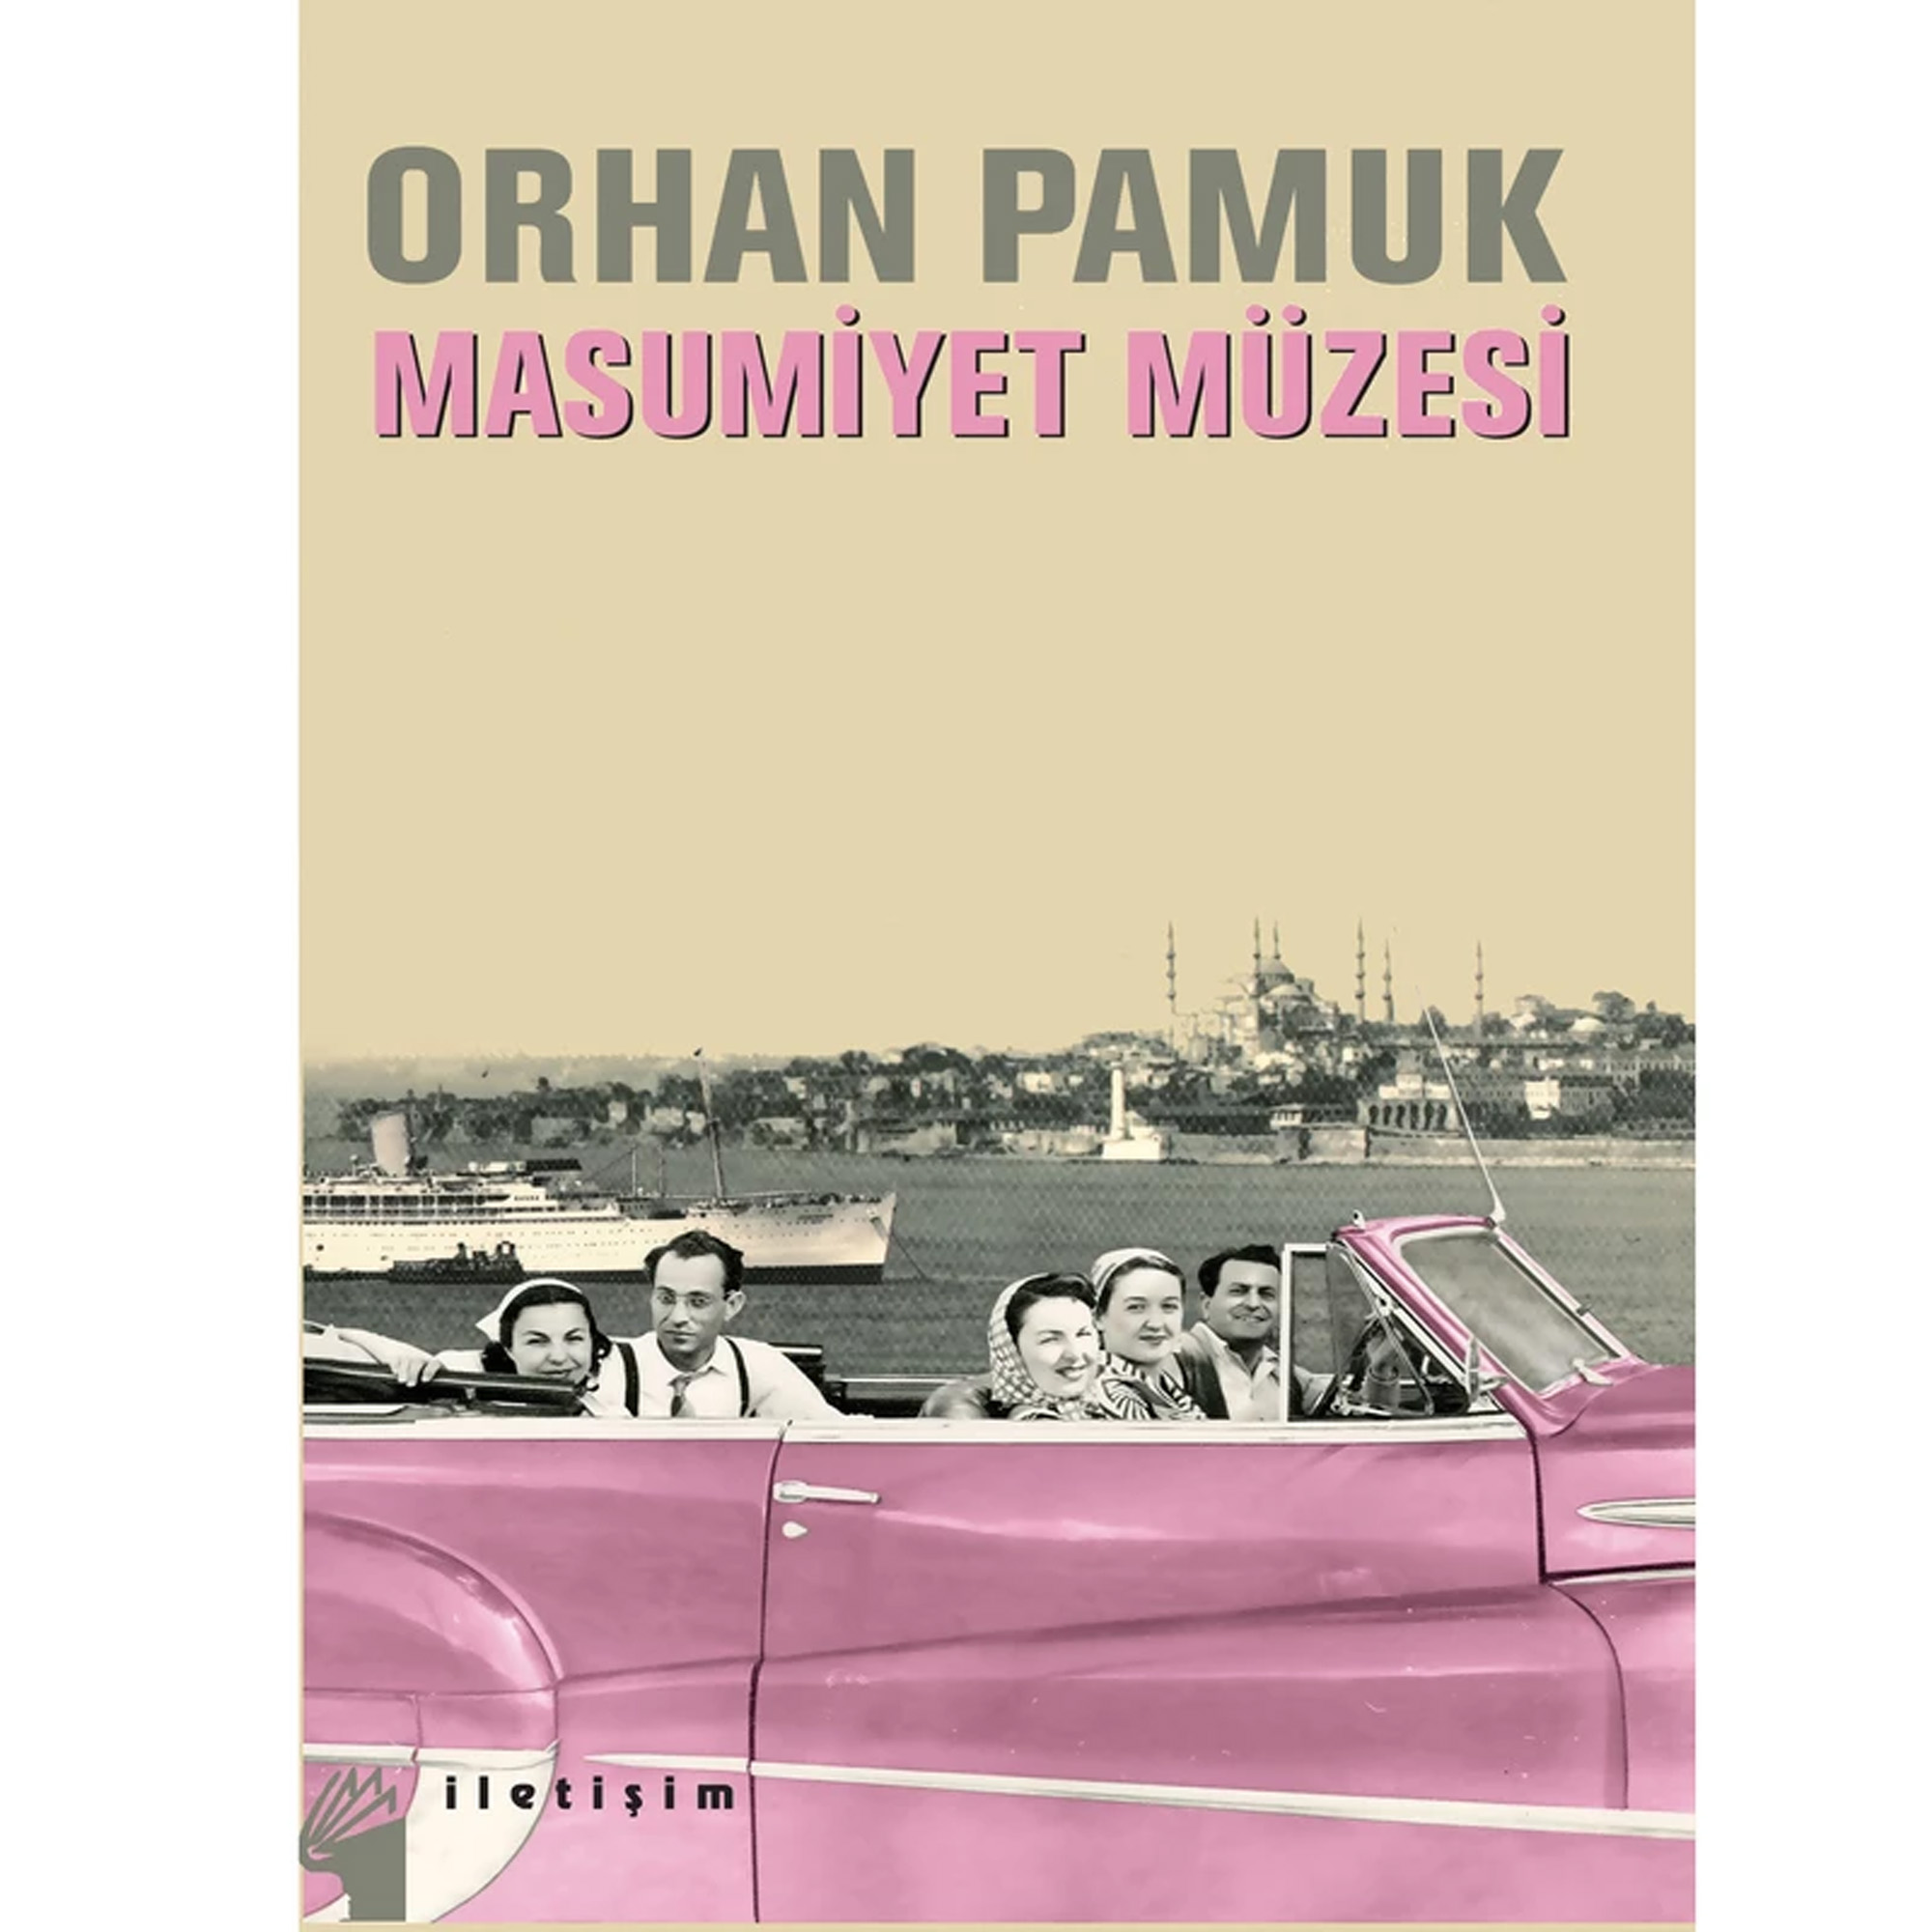 کتاب Masumiyet Muzesi اثر Orhan Pamuk انتشارات معیار علم